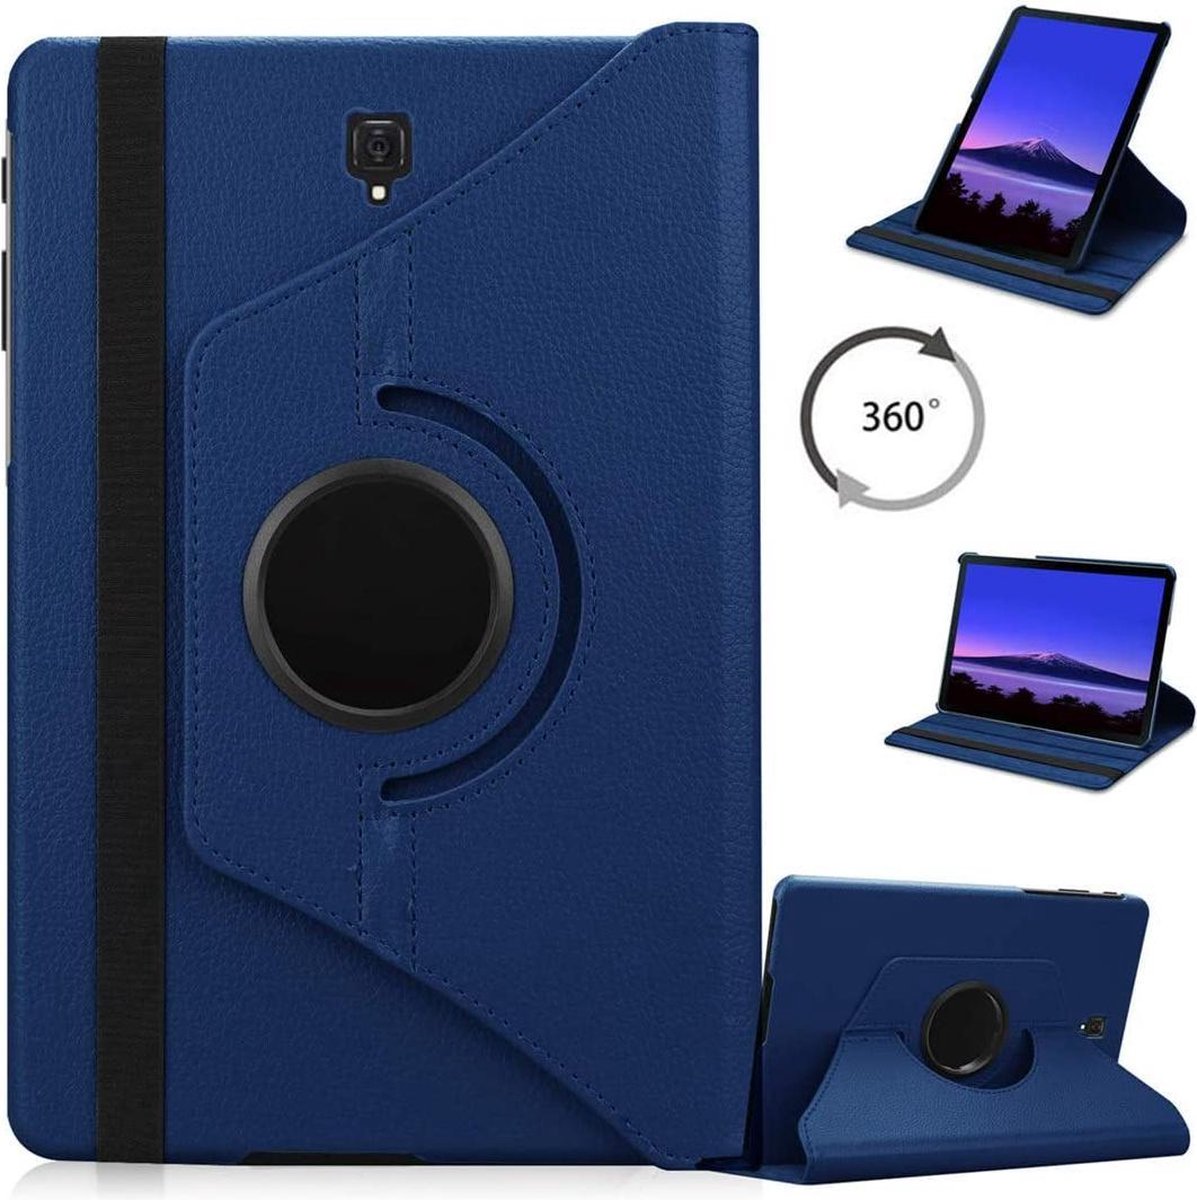 Draaibaar Hoesje - Rotation Tabletcase - Multi stand Case Geschikt voor: Samsung Galaxy Tab A 10.1 inch T580 / T585 (2016 2018) - donker blauw